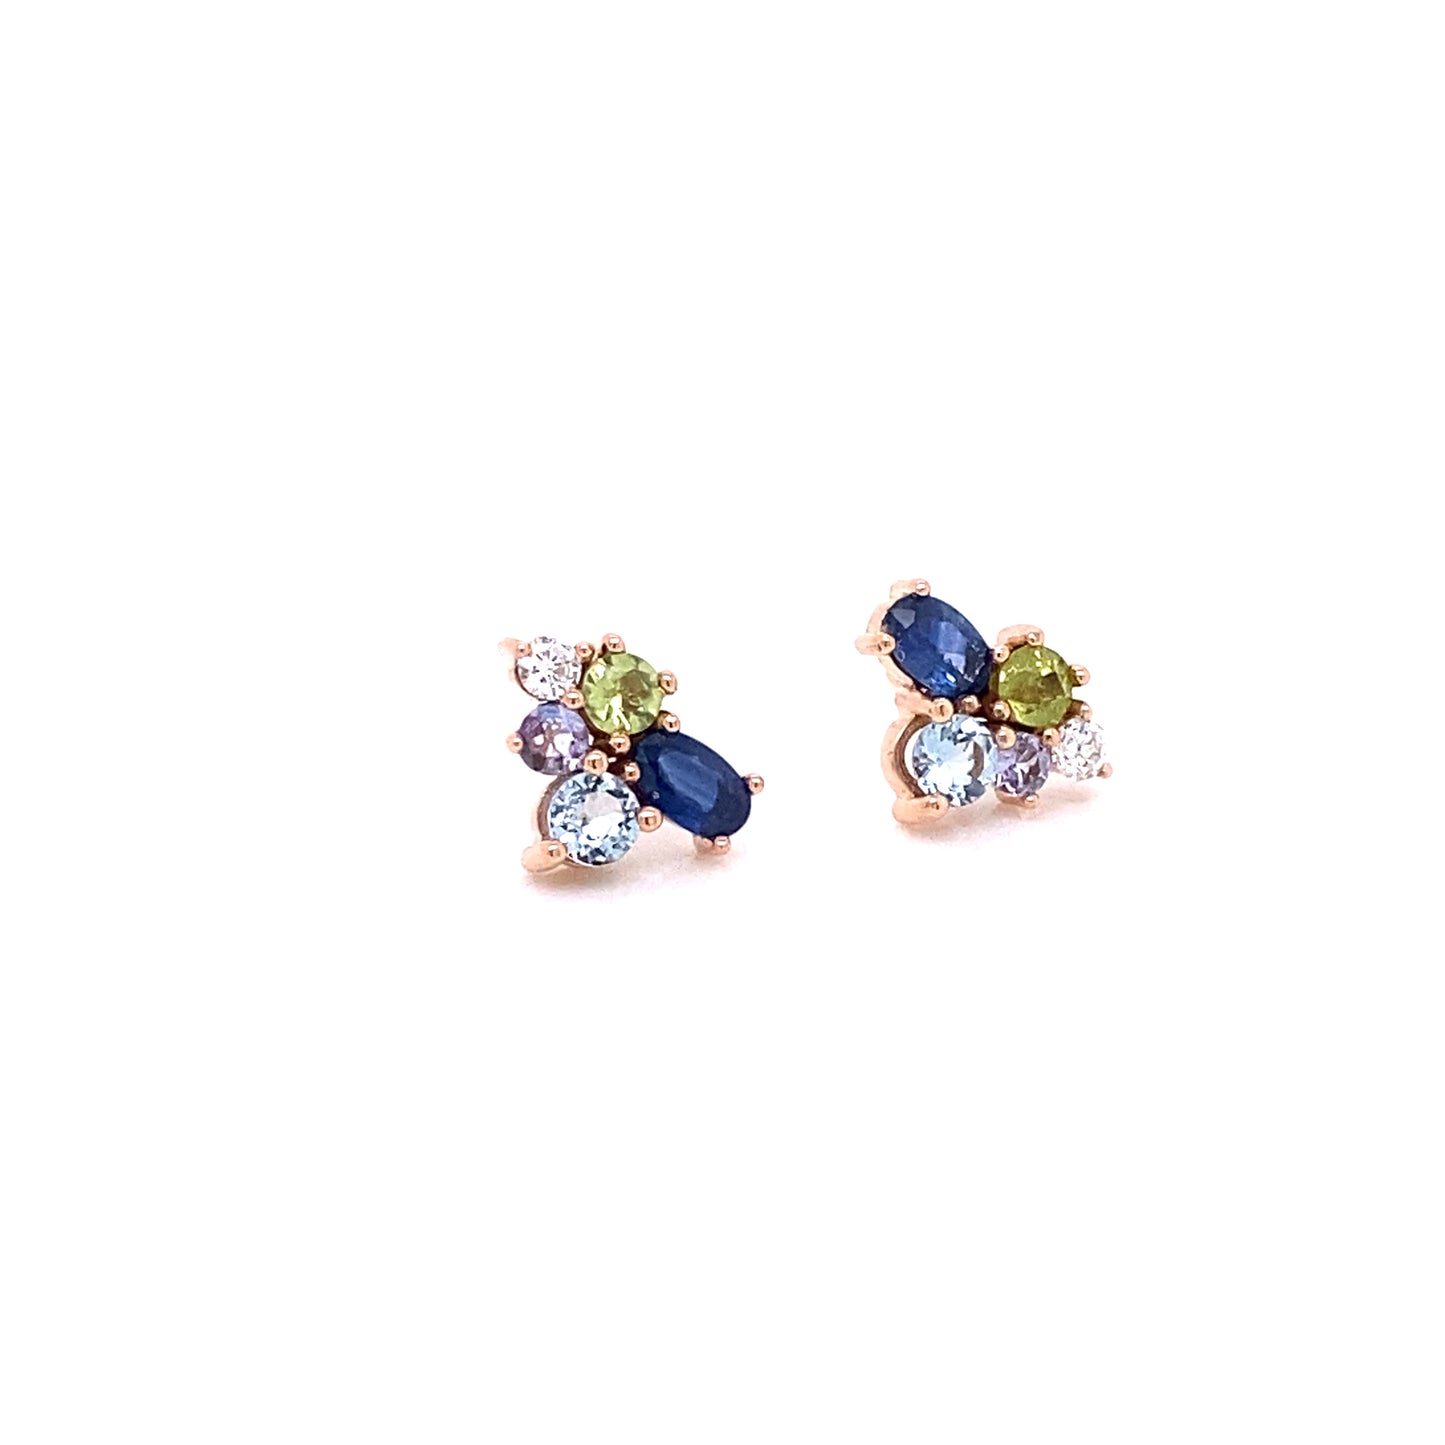 UNIQUE PIECE / Sapphire, afumarine, peridot, tanzanite and diamond earrings / IMMEDIATE DELIVERY